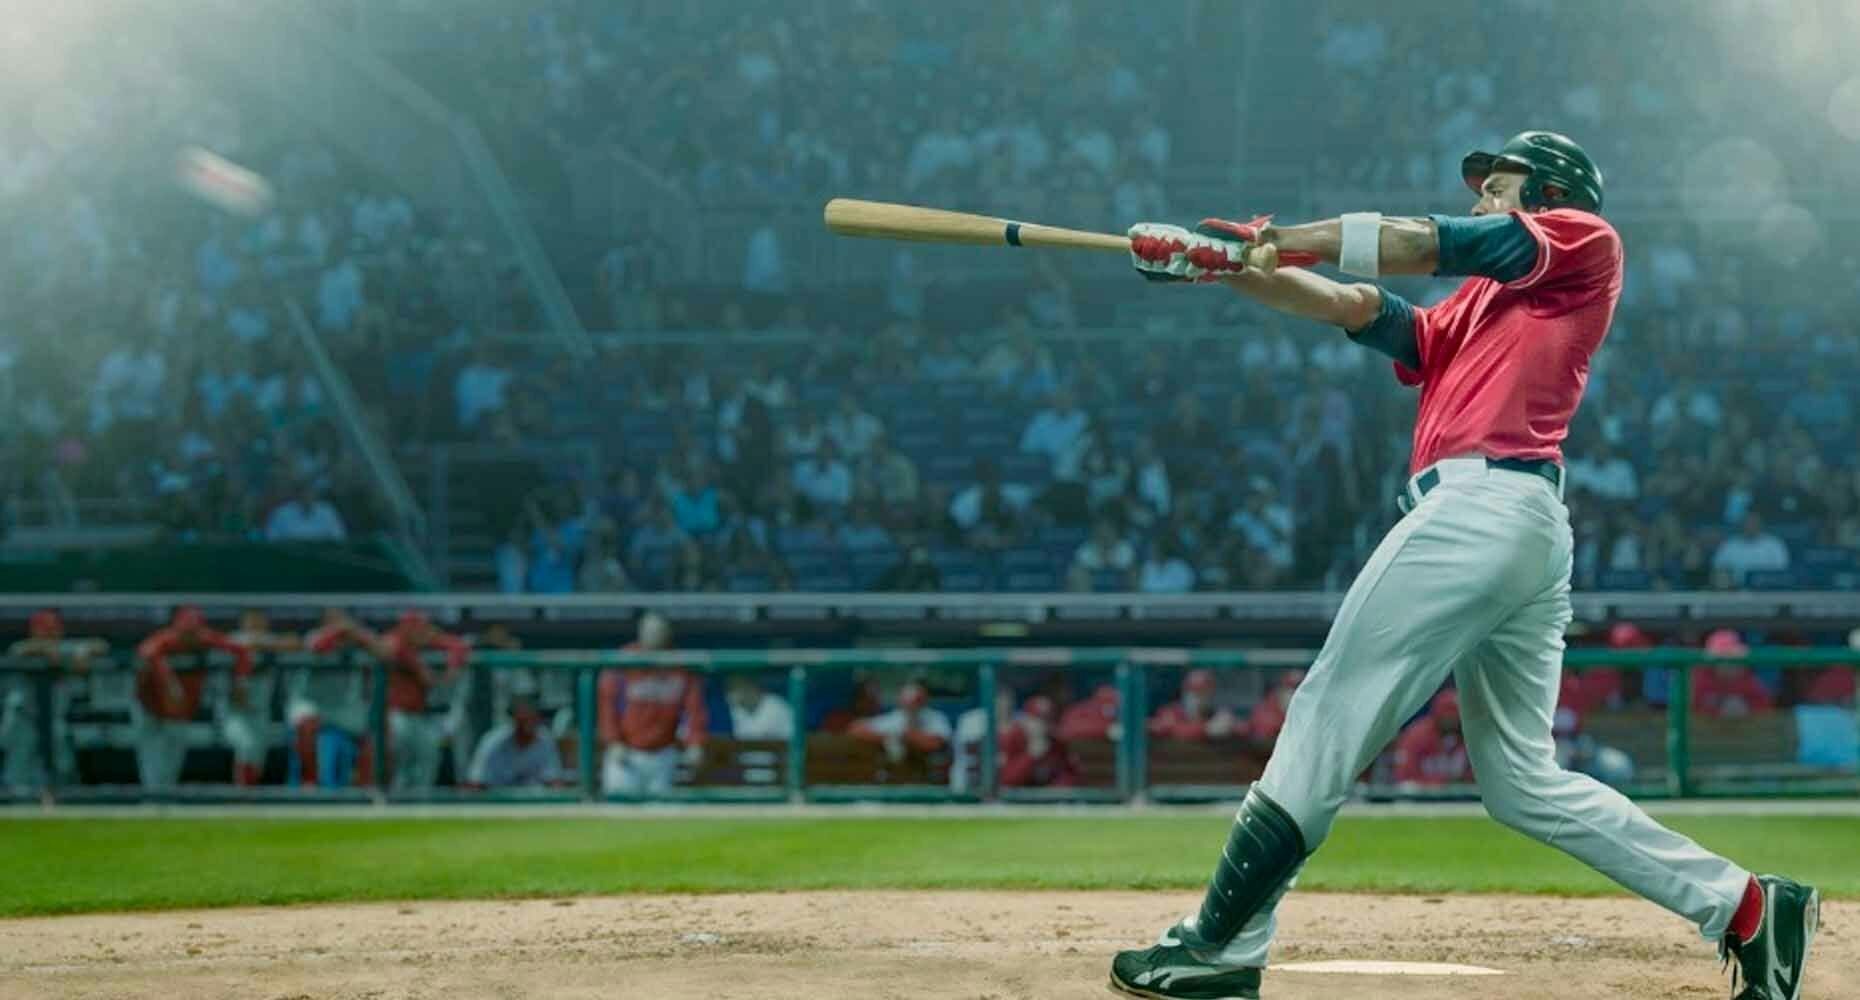 Baseball player swinging for a homerun